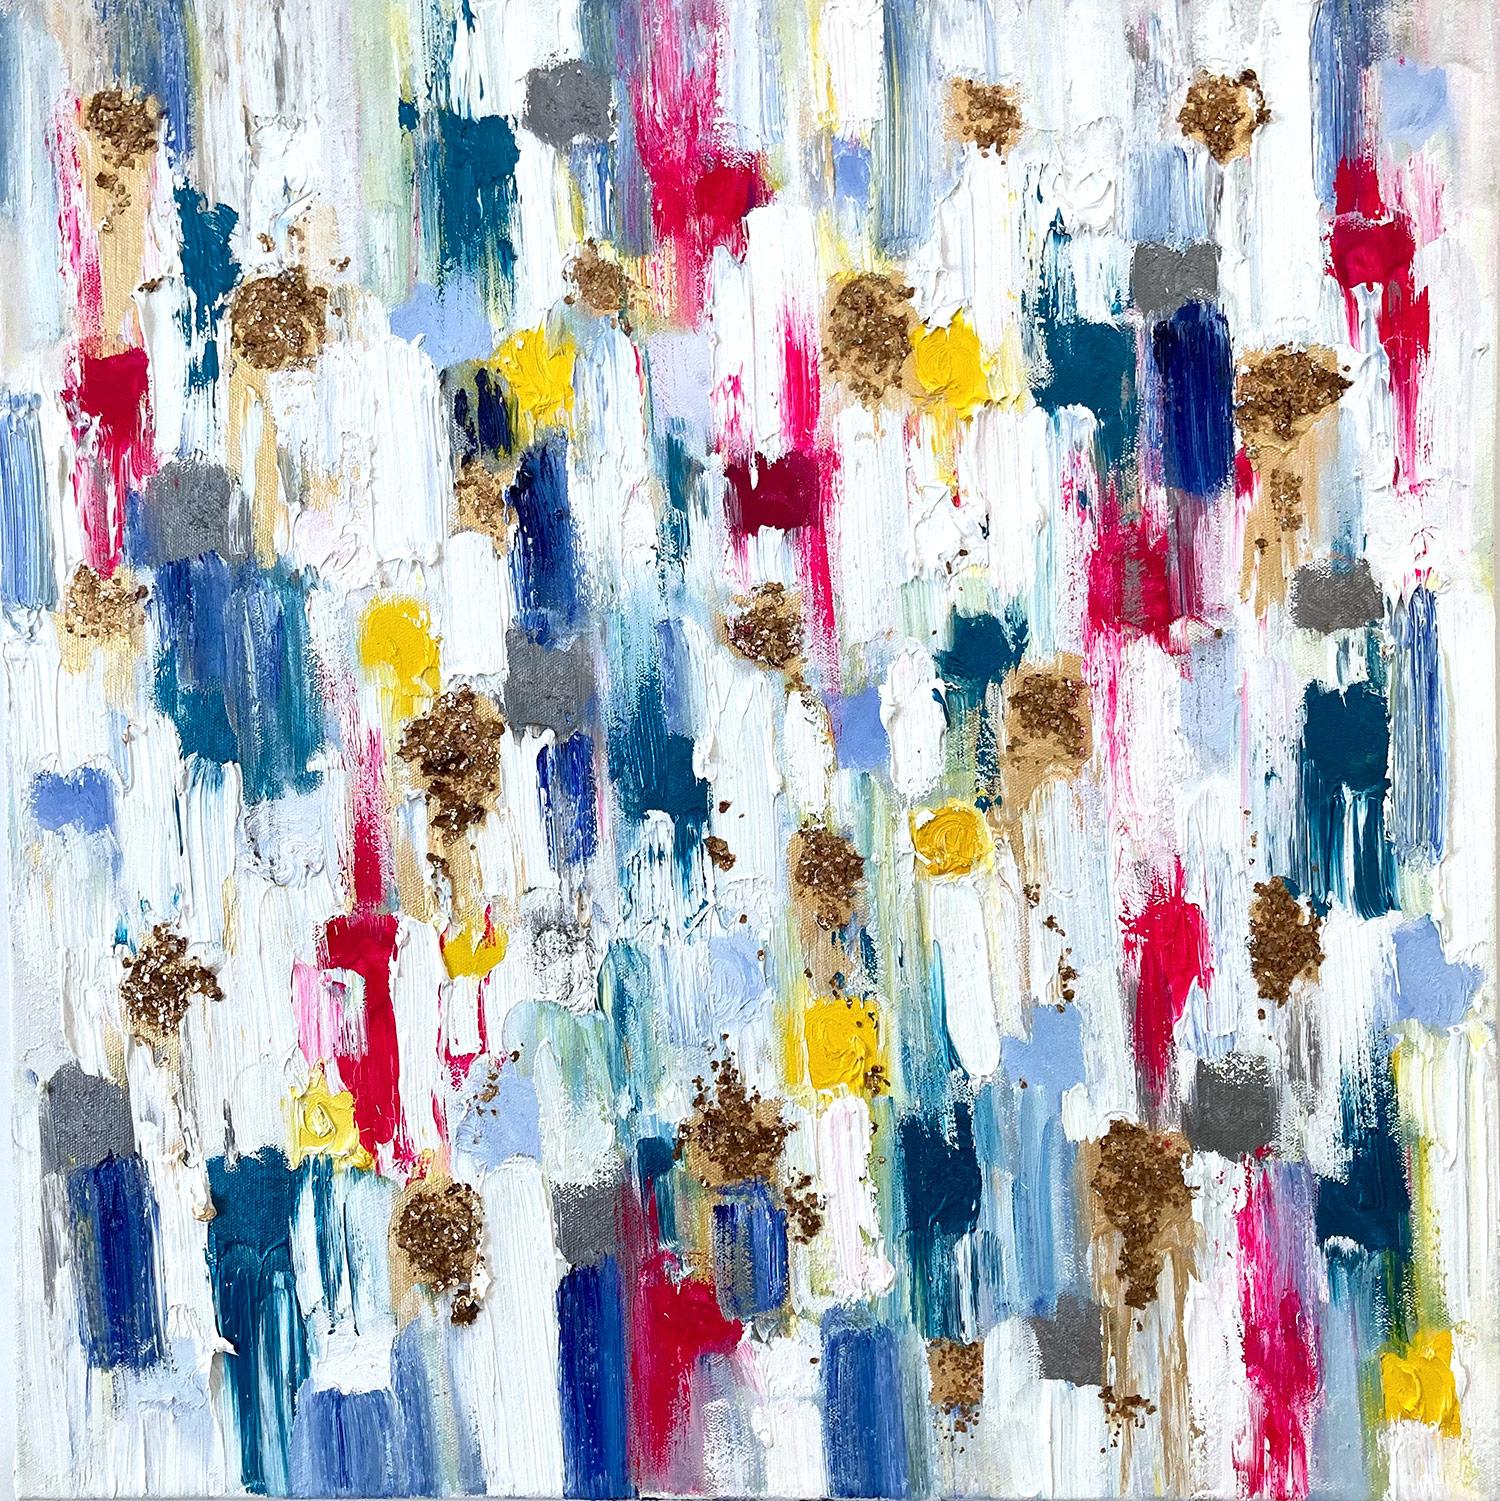 Abstract Painting Cindy Shaoul - "Dripping Dots - Hollywood Boulevard" - Peinture à l'huile abstraite colorée sur toile